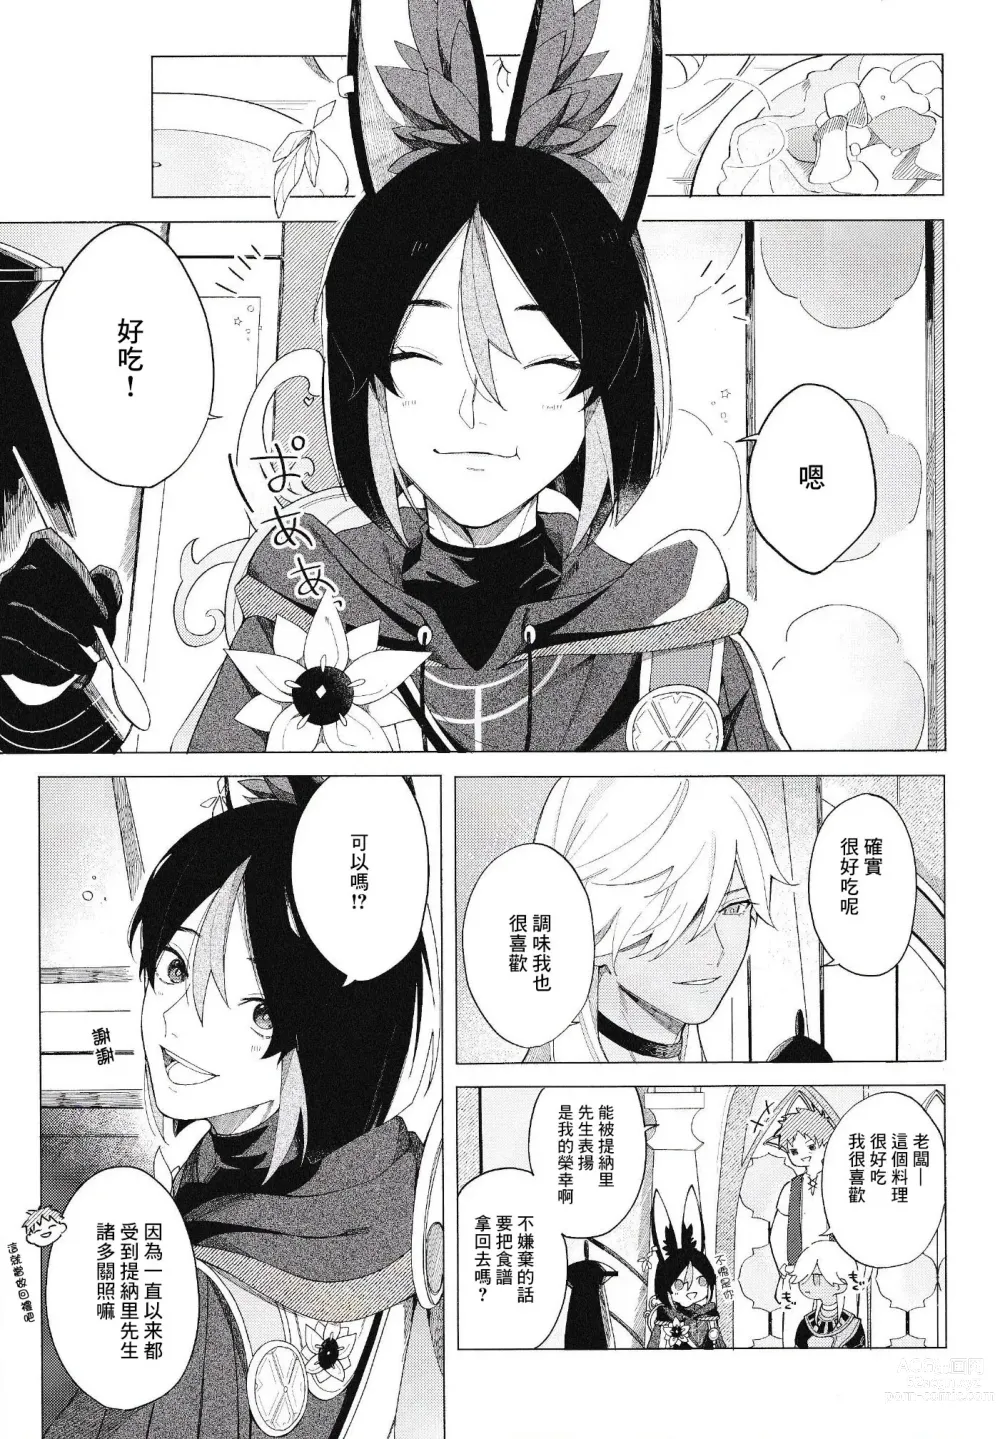 Page 6 of doujinshi 這種咬法沒聽說過啊!